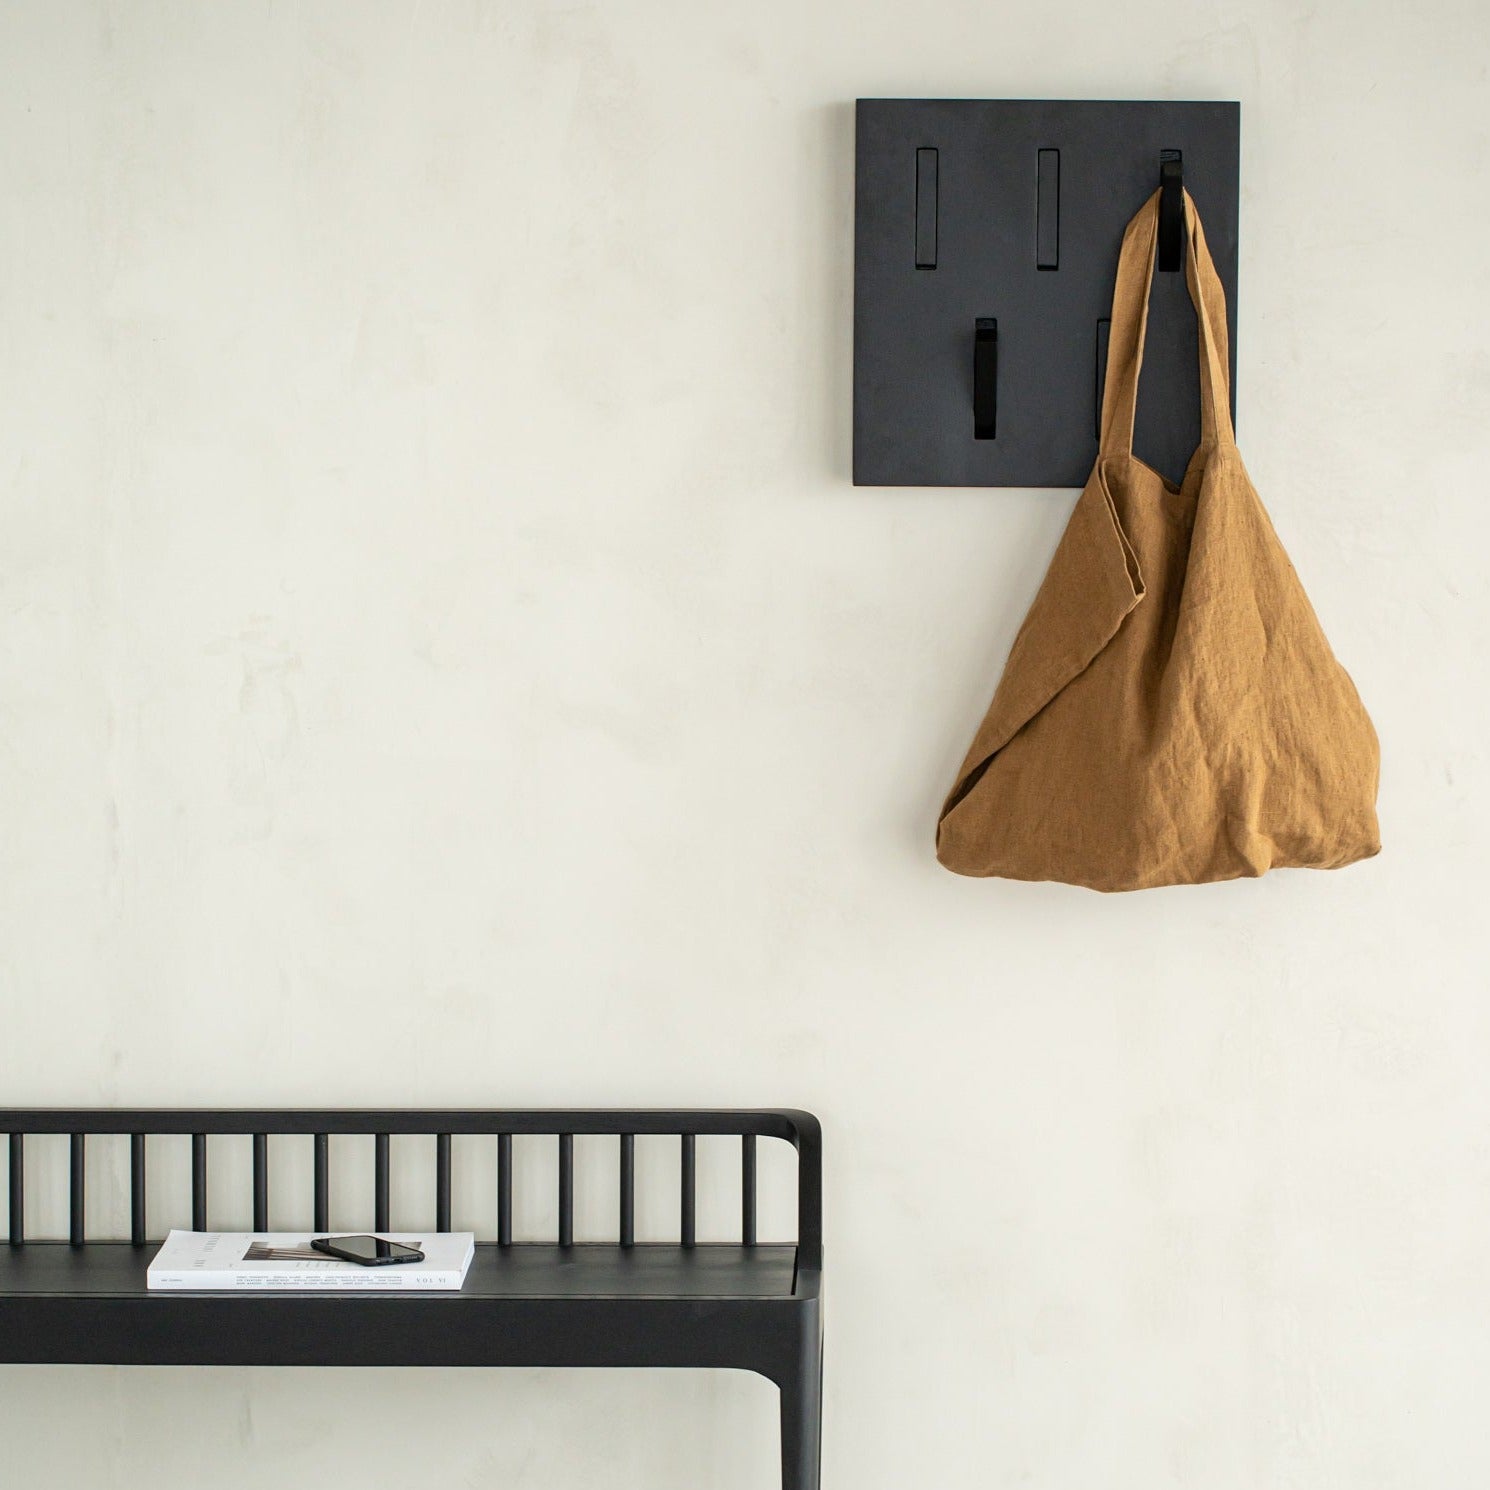 Utilitile Solid Black Oak Wall Hanger